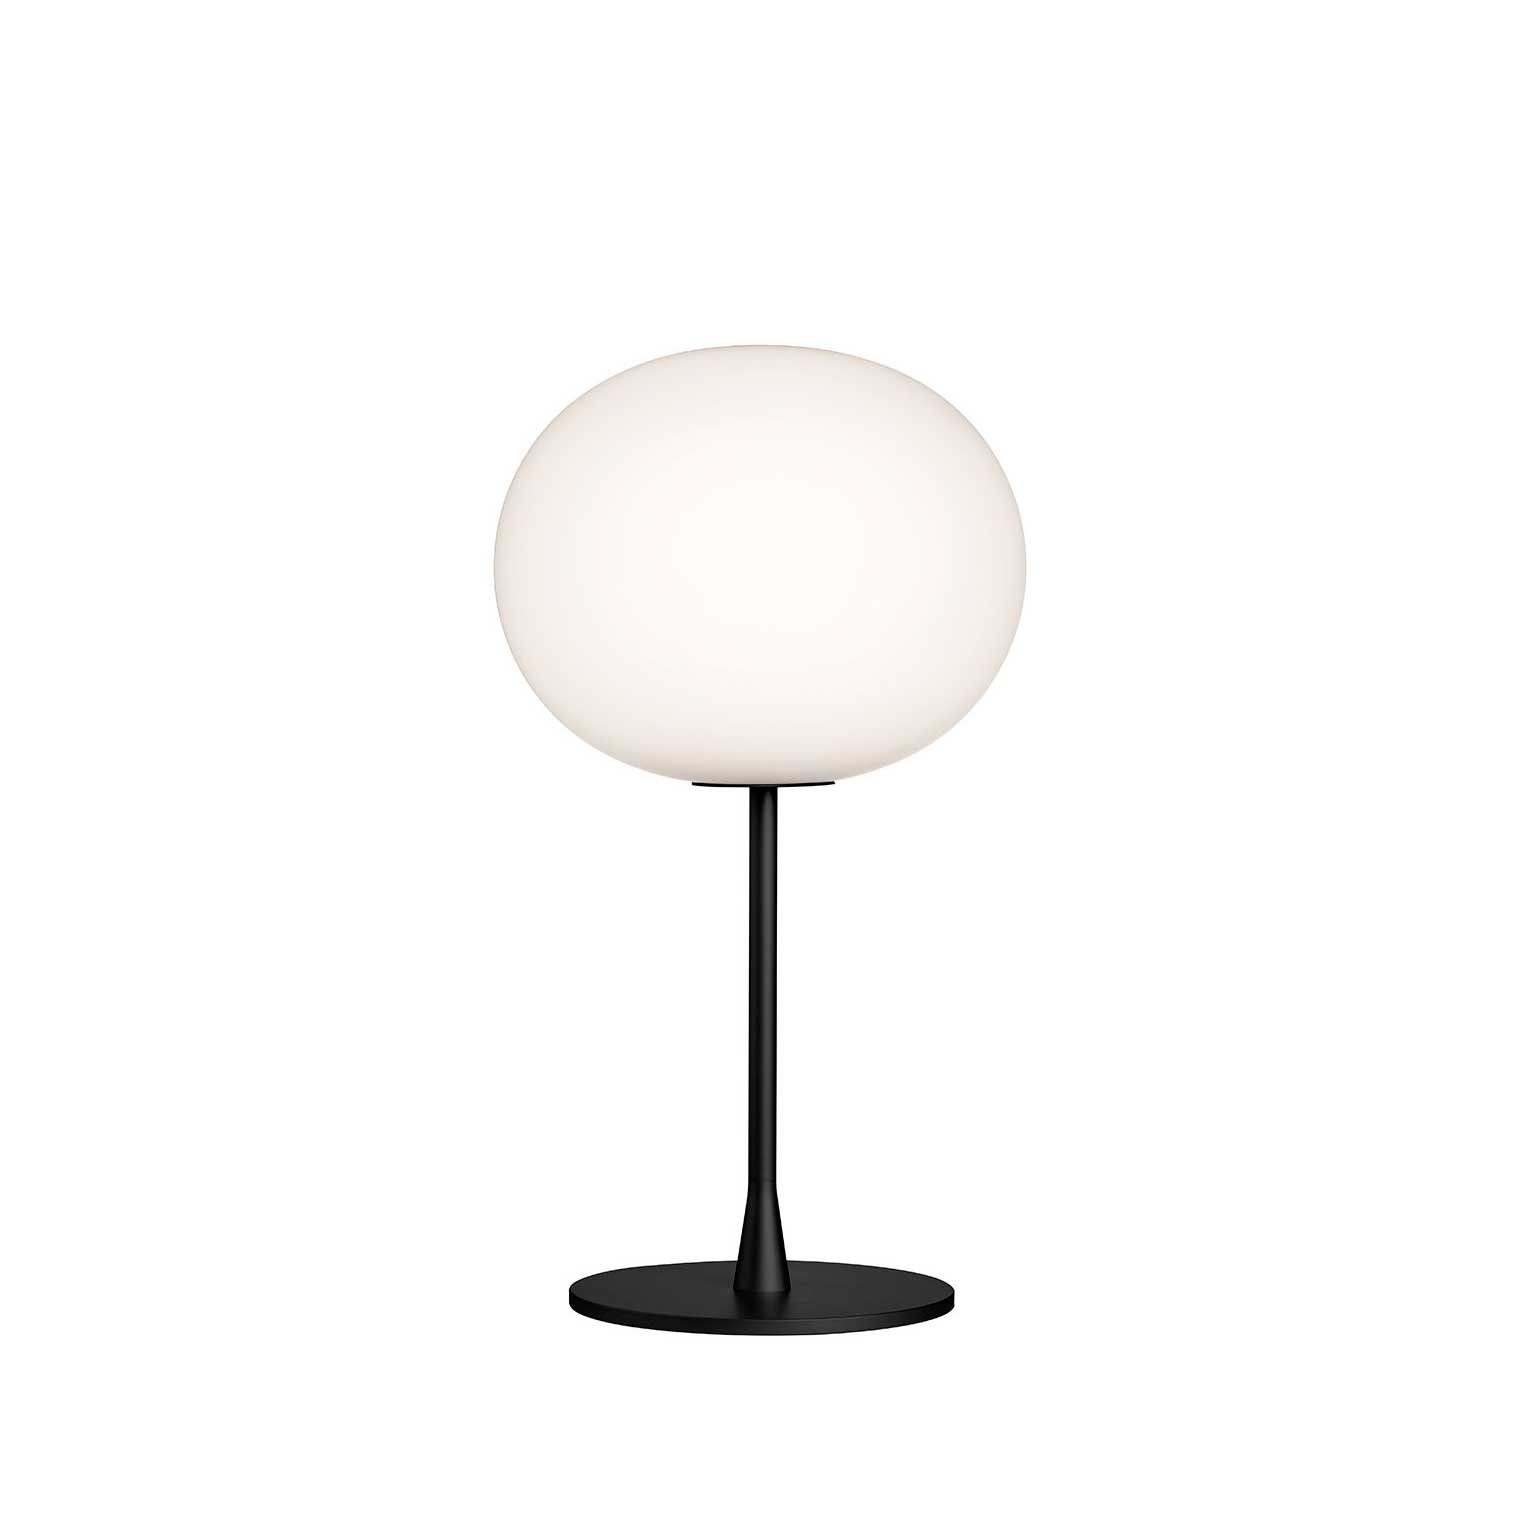 lampara de mesa globall flos diseño italiano original iluminacion aguero buenos aires argentina